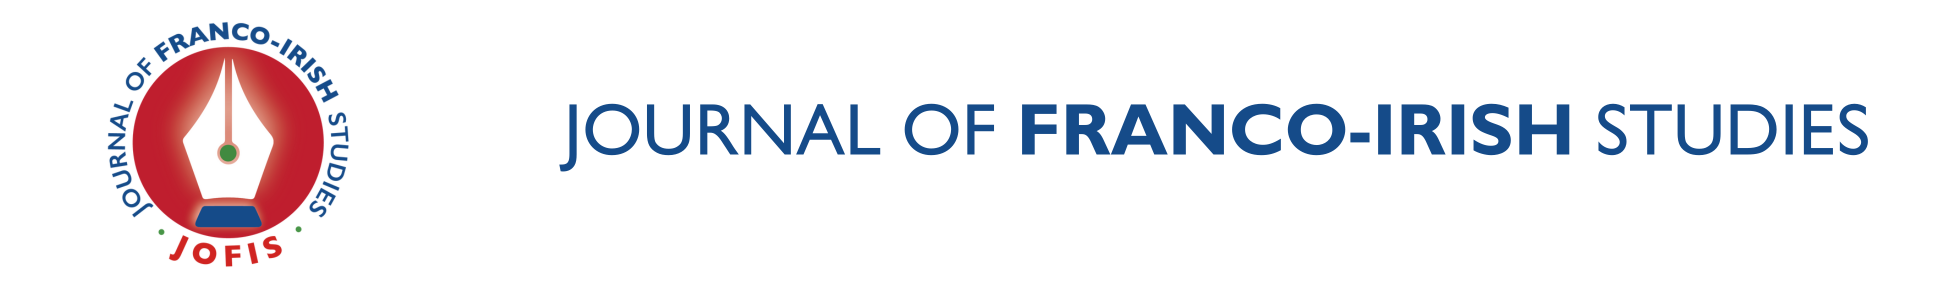 Journal of Franco-Irish Studies